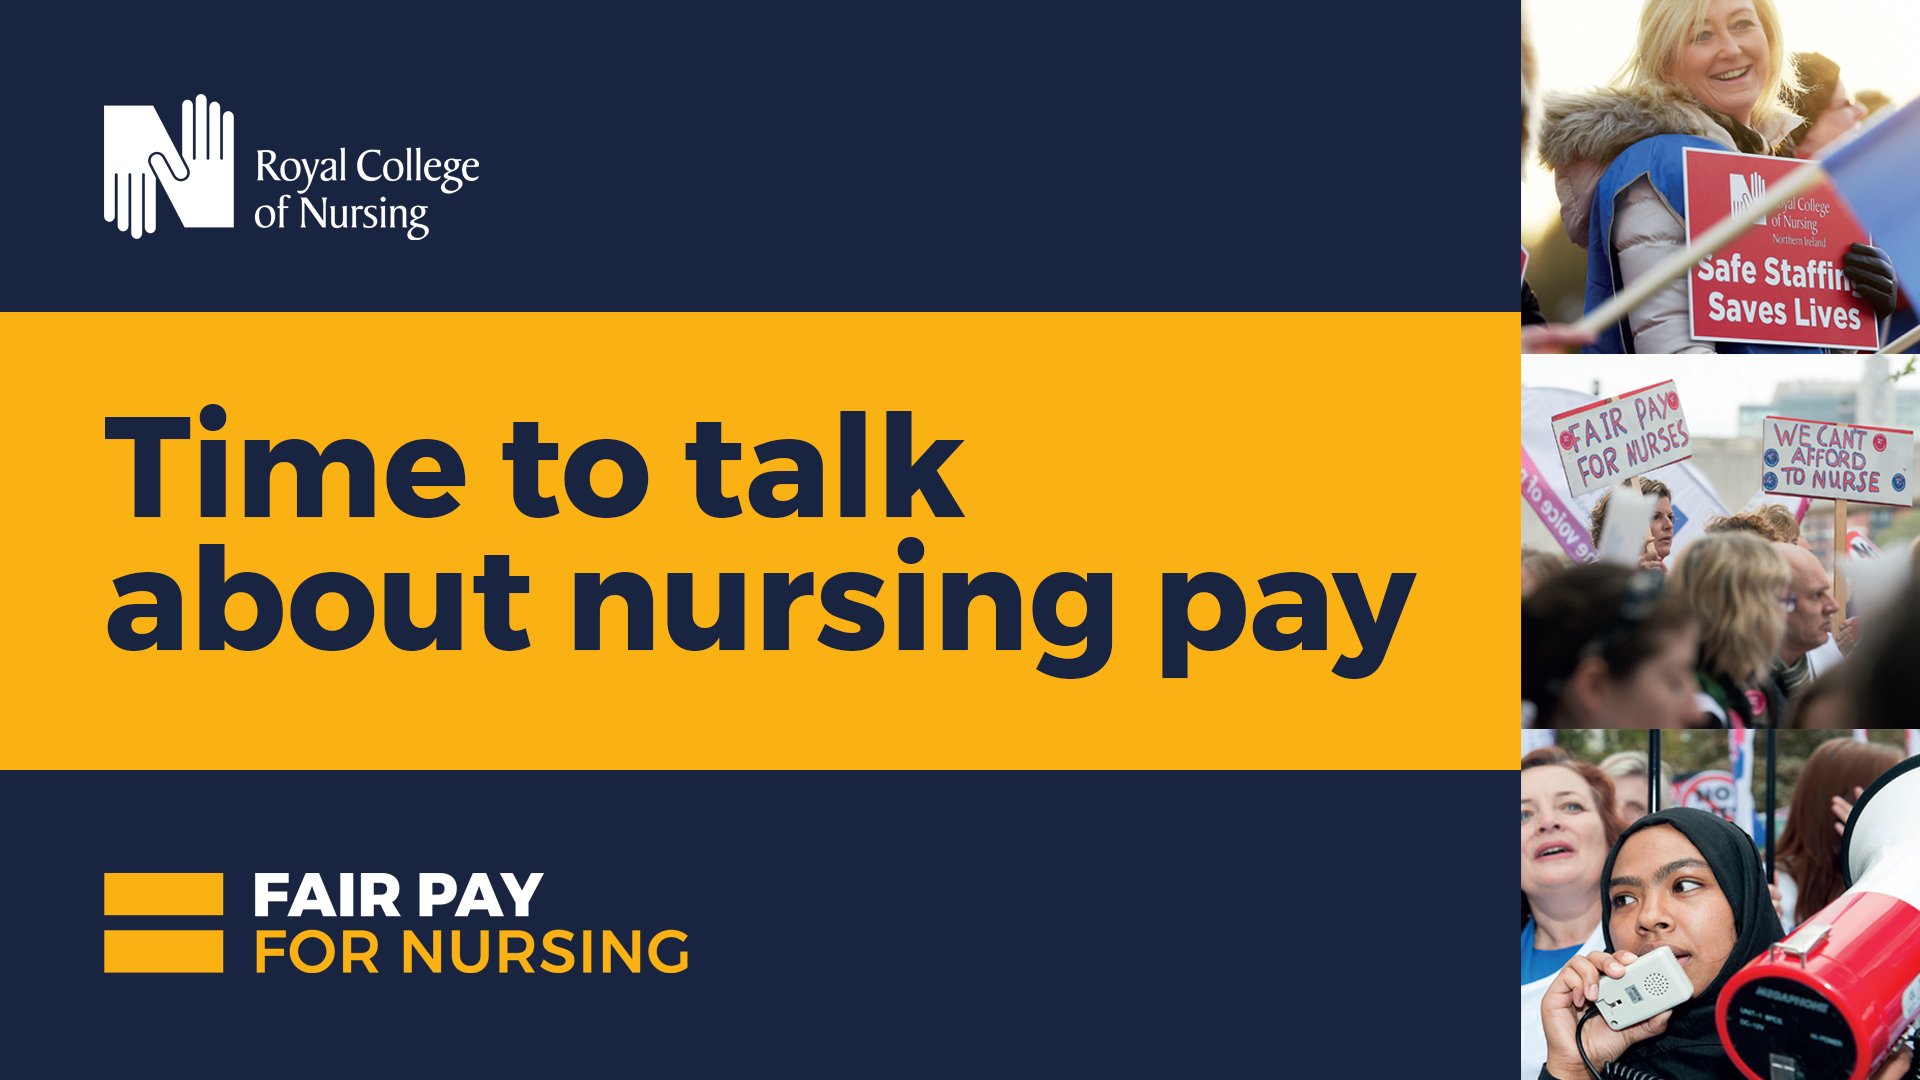 Fair Pay for Nursing